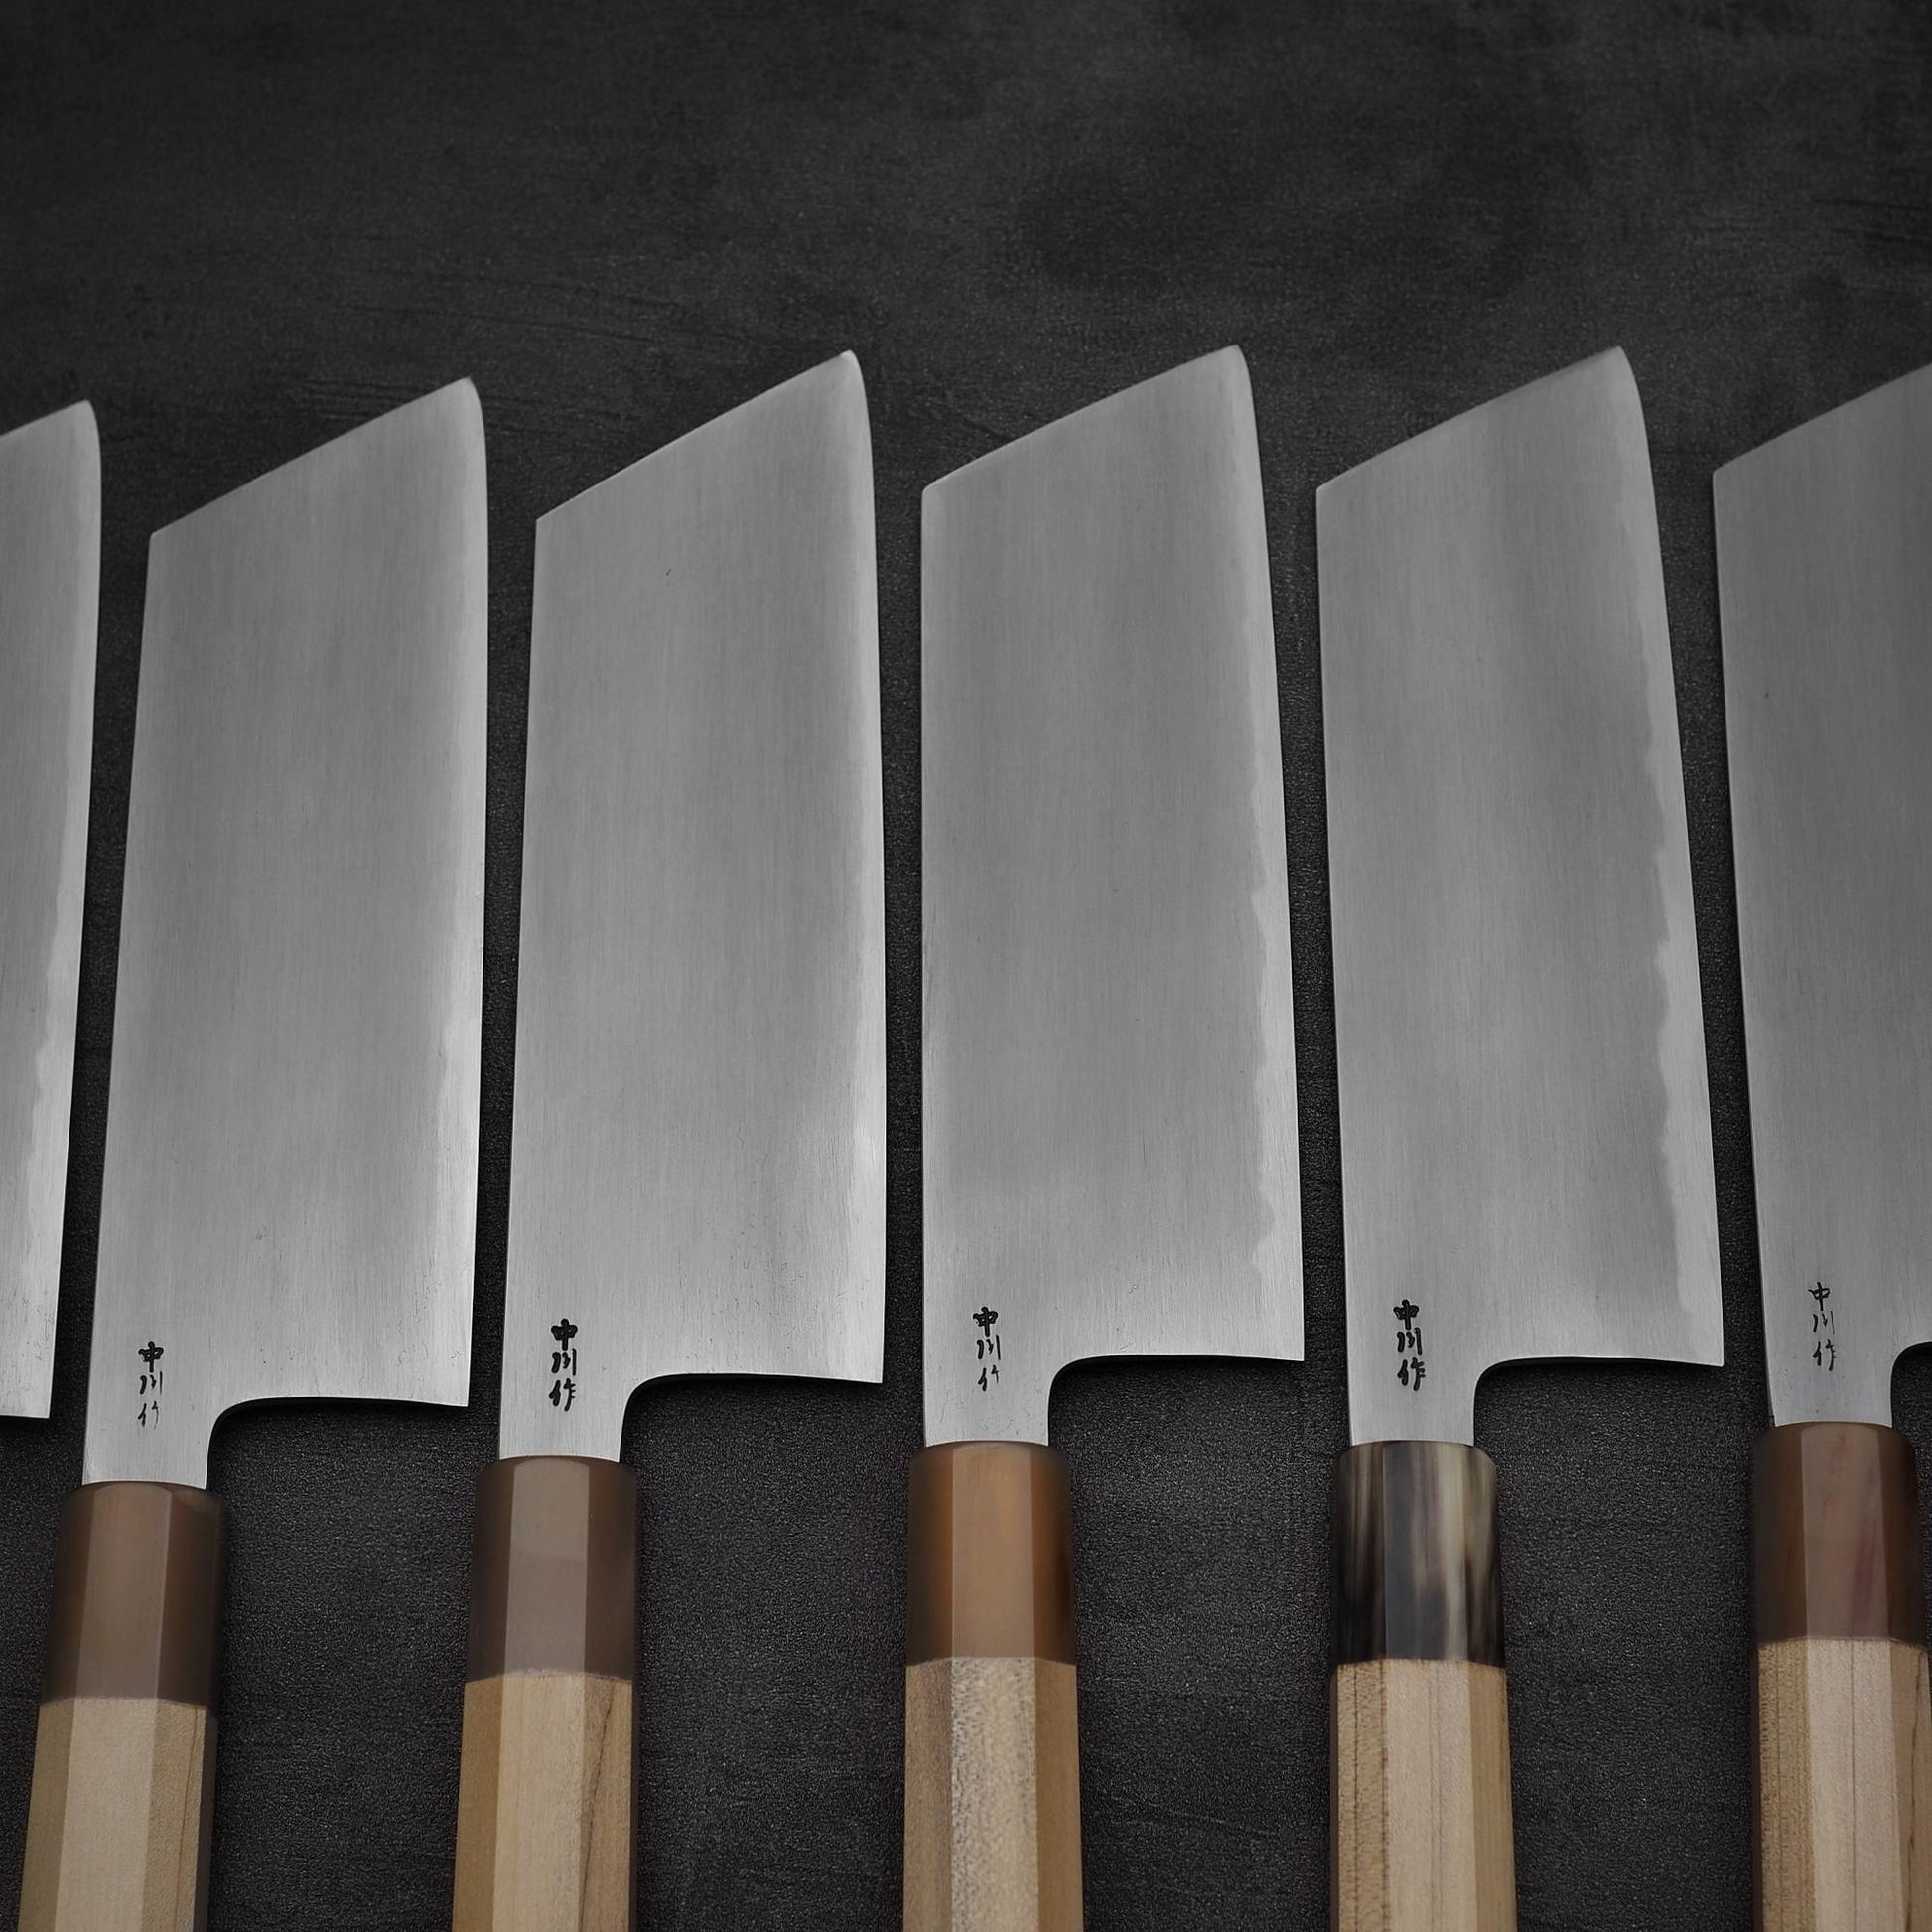 A group photo of multiple Nakagawa bokashi shirogami#1 ktip nakiri knives